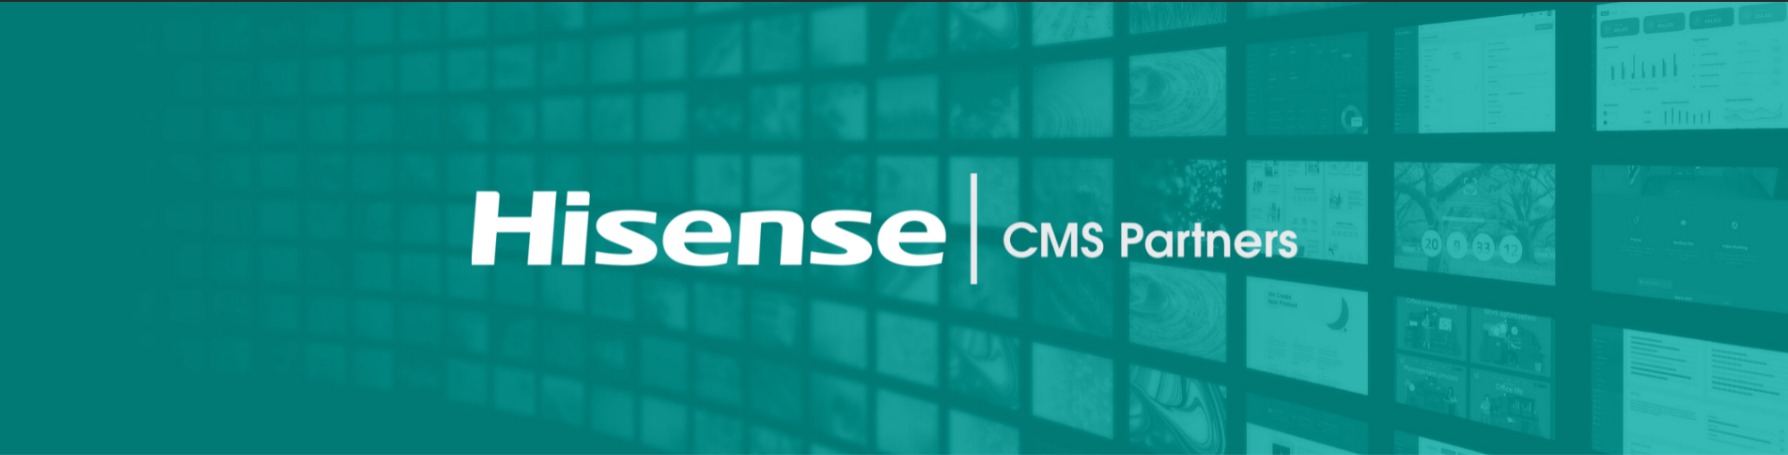 Hisense CMS Partners